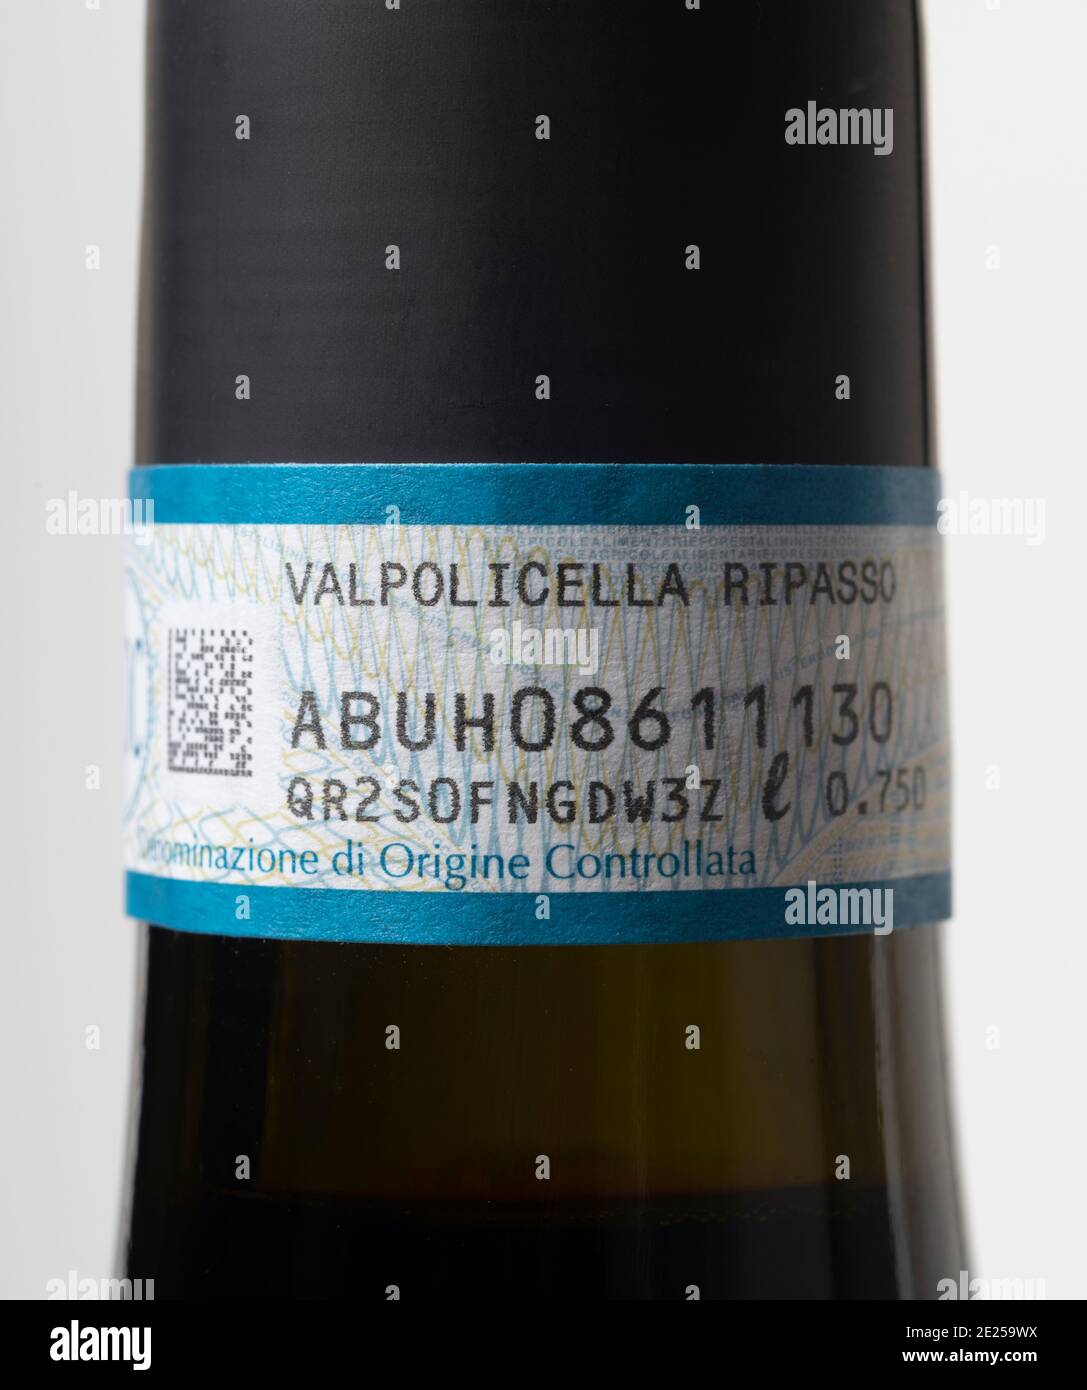 Valpolicella Ripasso Italian red wine bottle serial number neck label Stock Photo